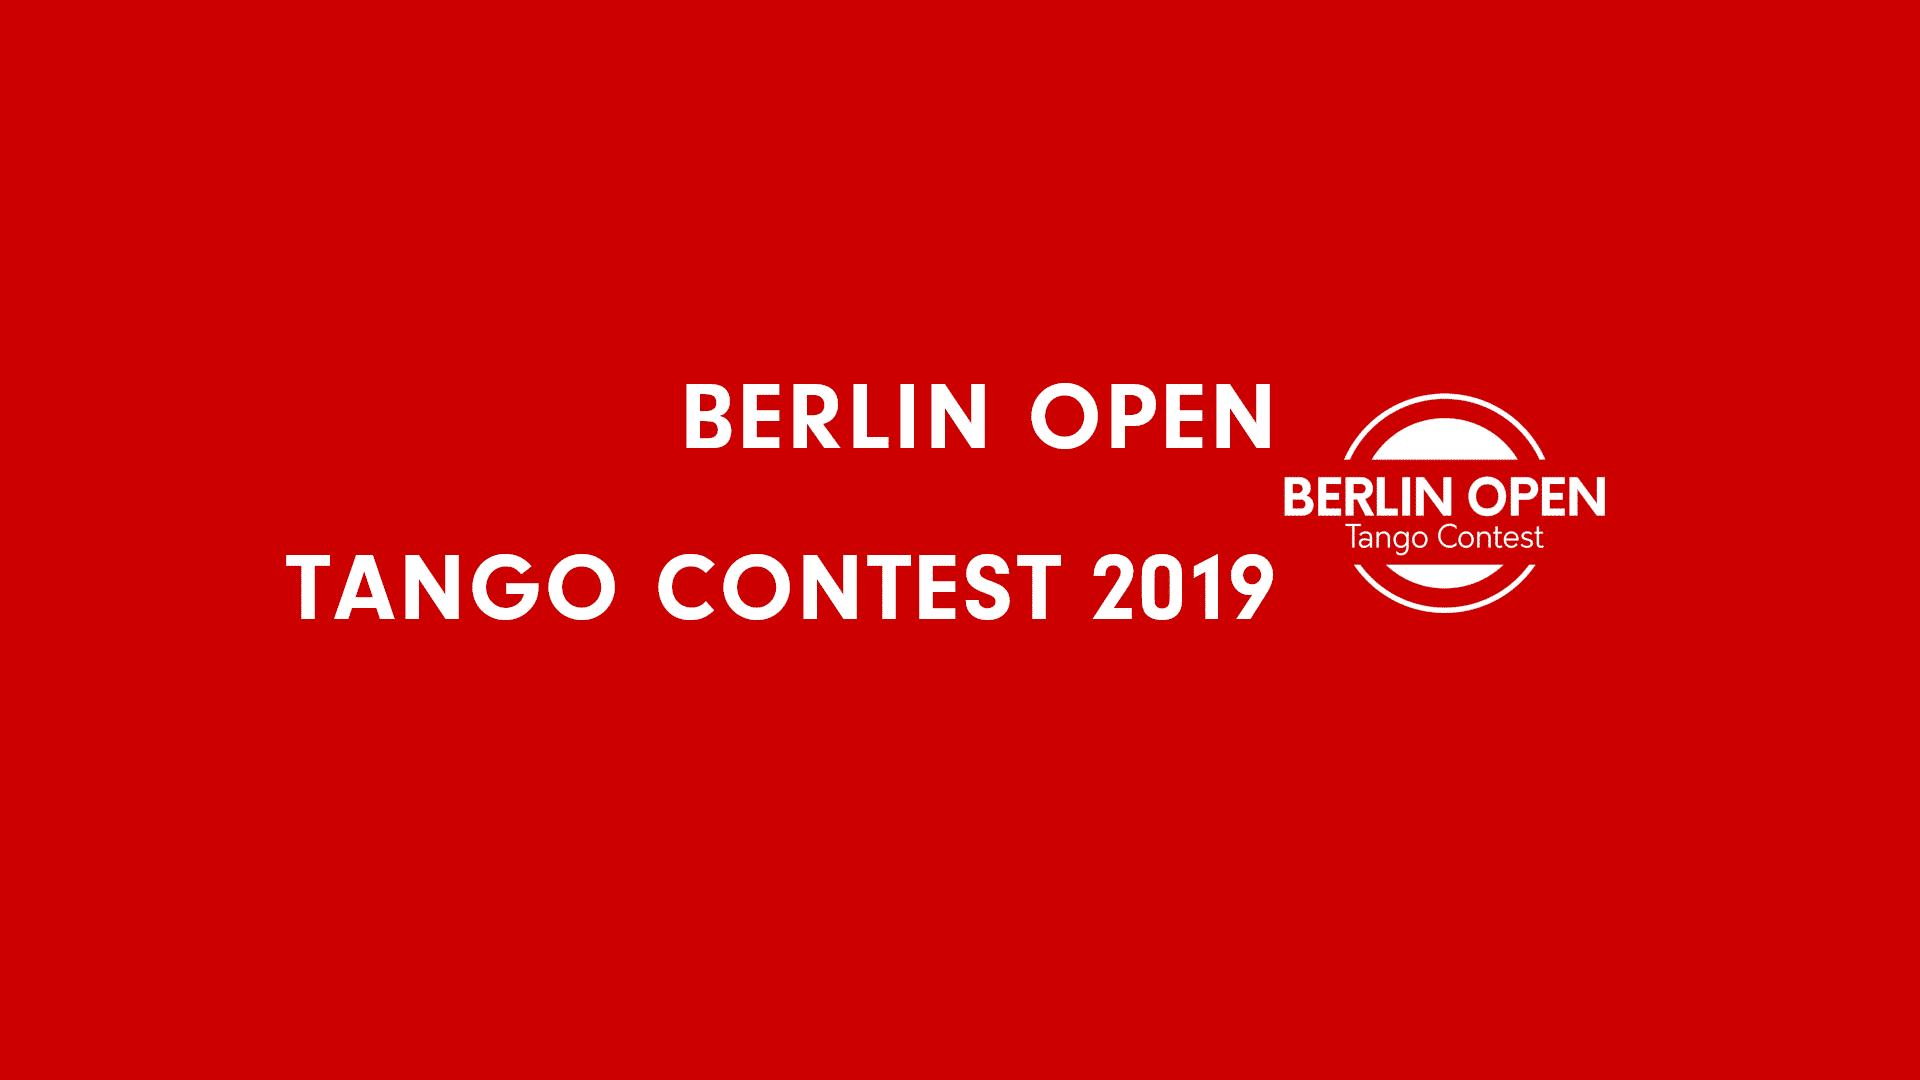 Berlin Open Tango Contest 2019 event picture